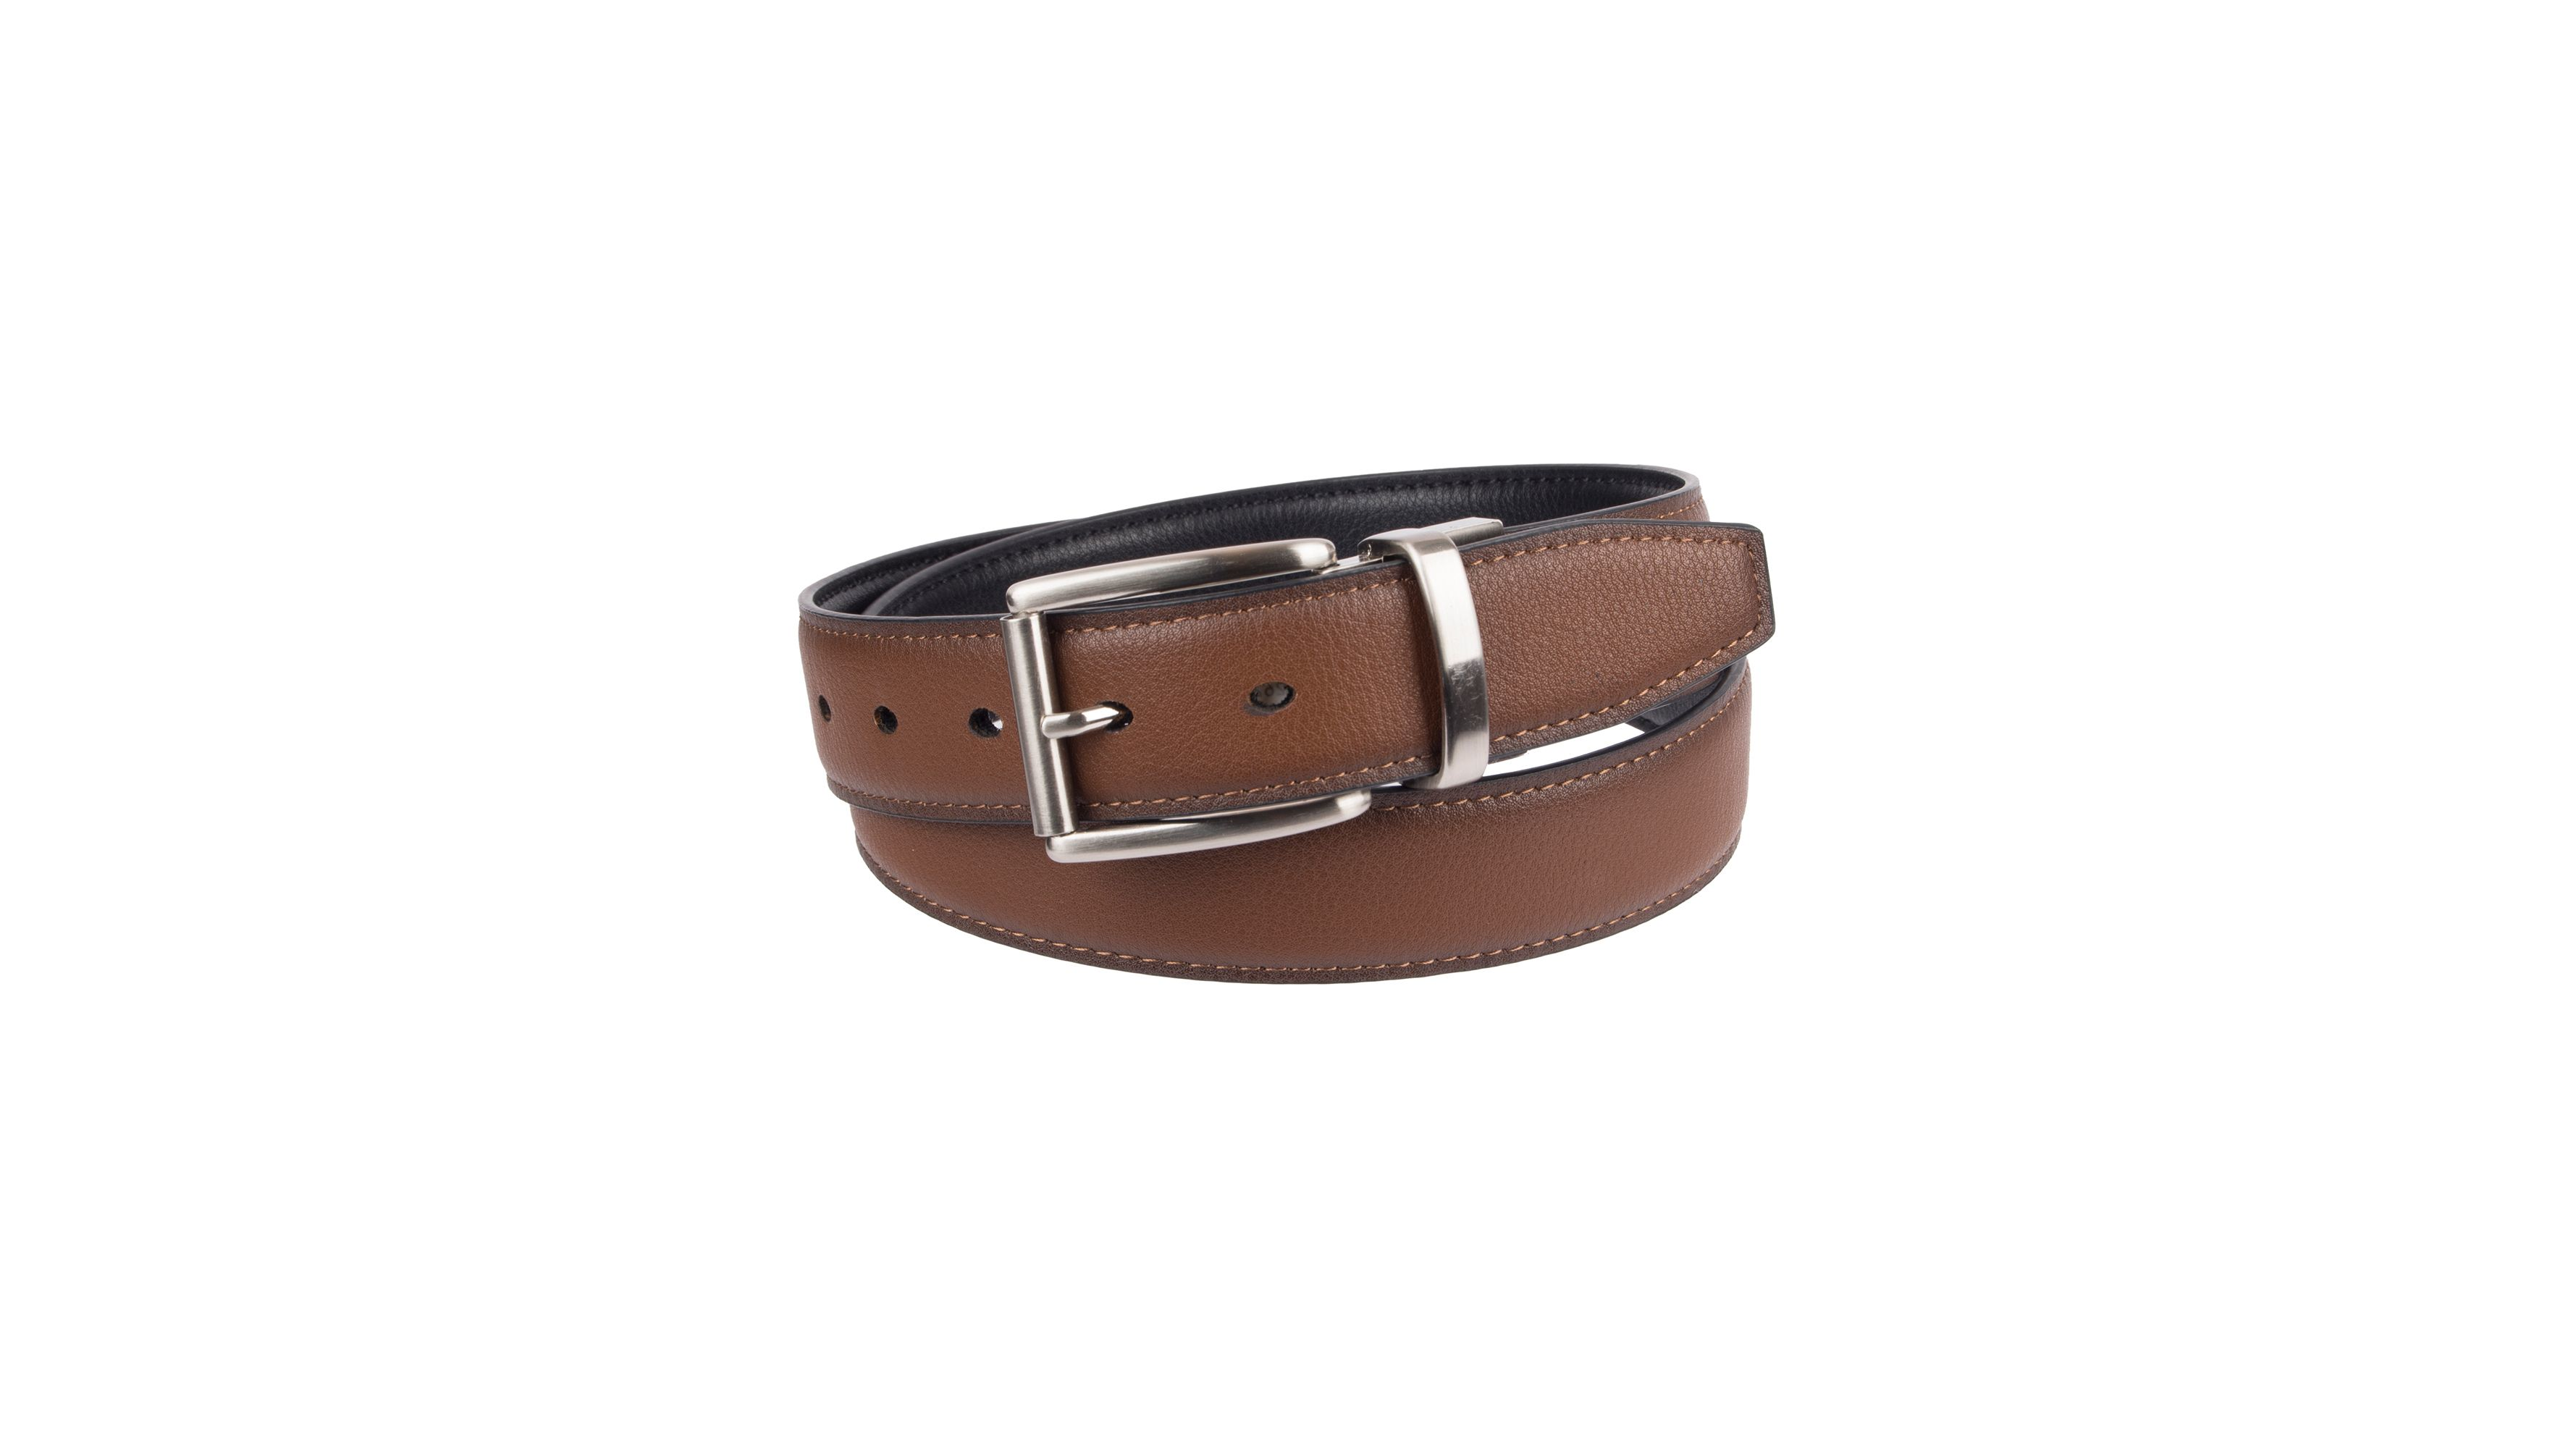 DOCKERS CASUAL - Braided belt - Brown/brown - Zalando.de